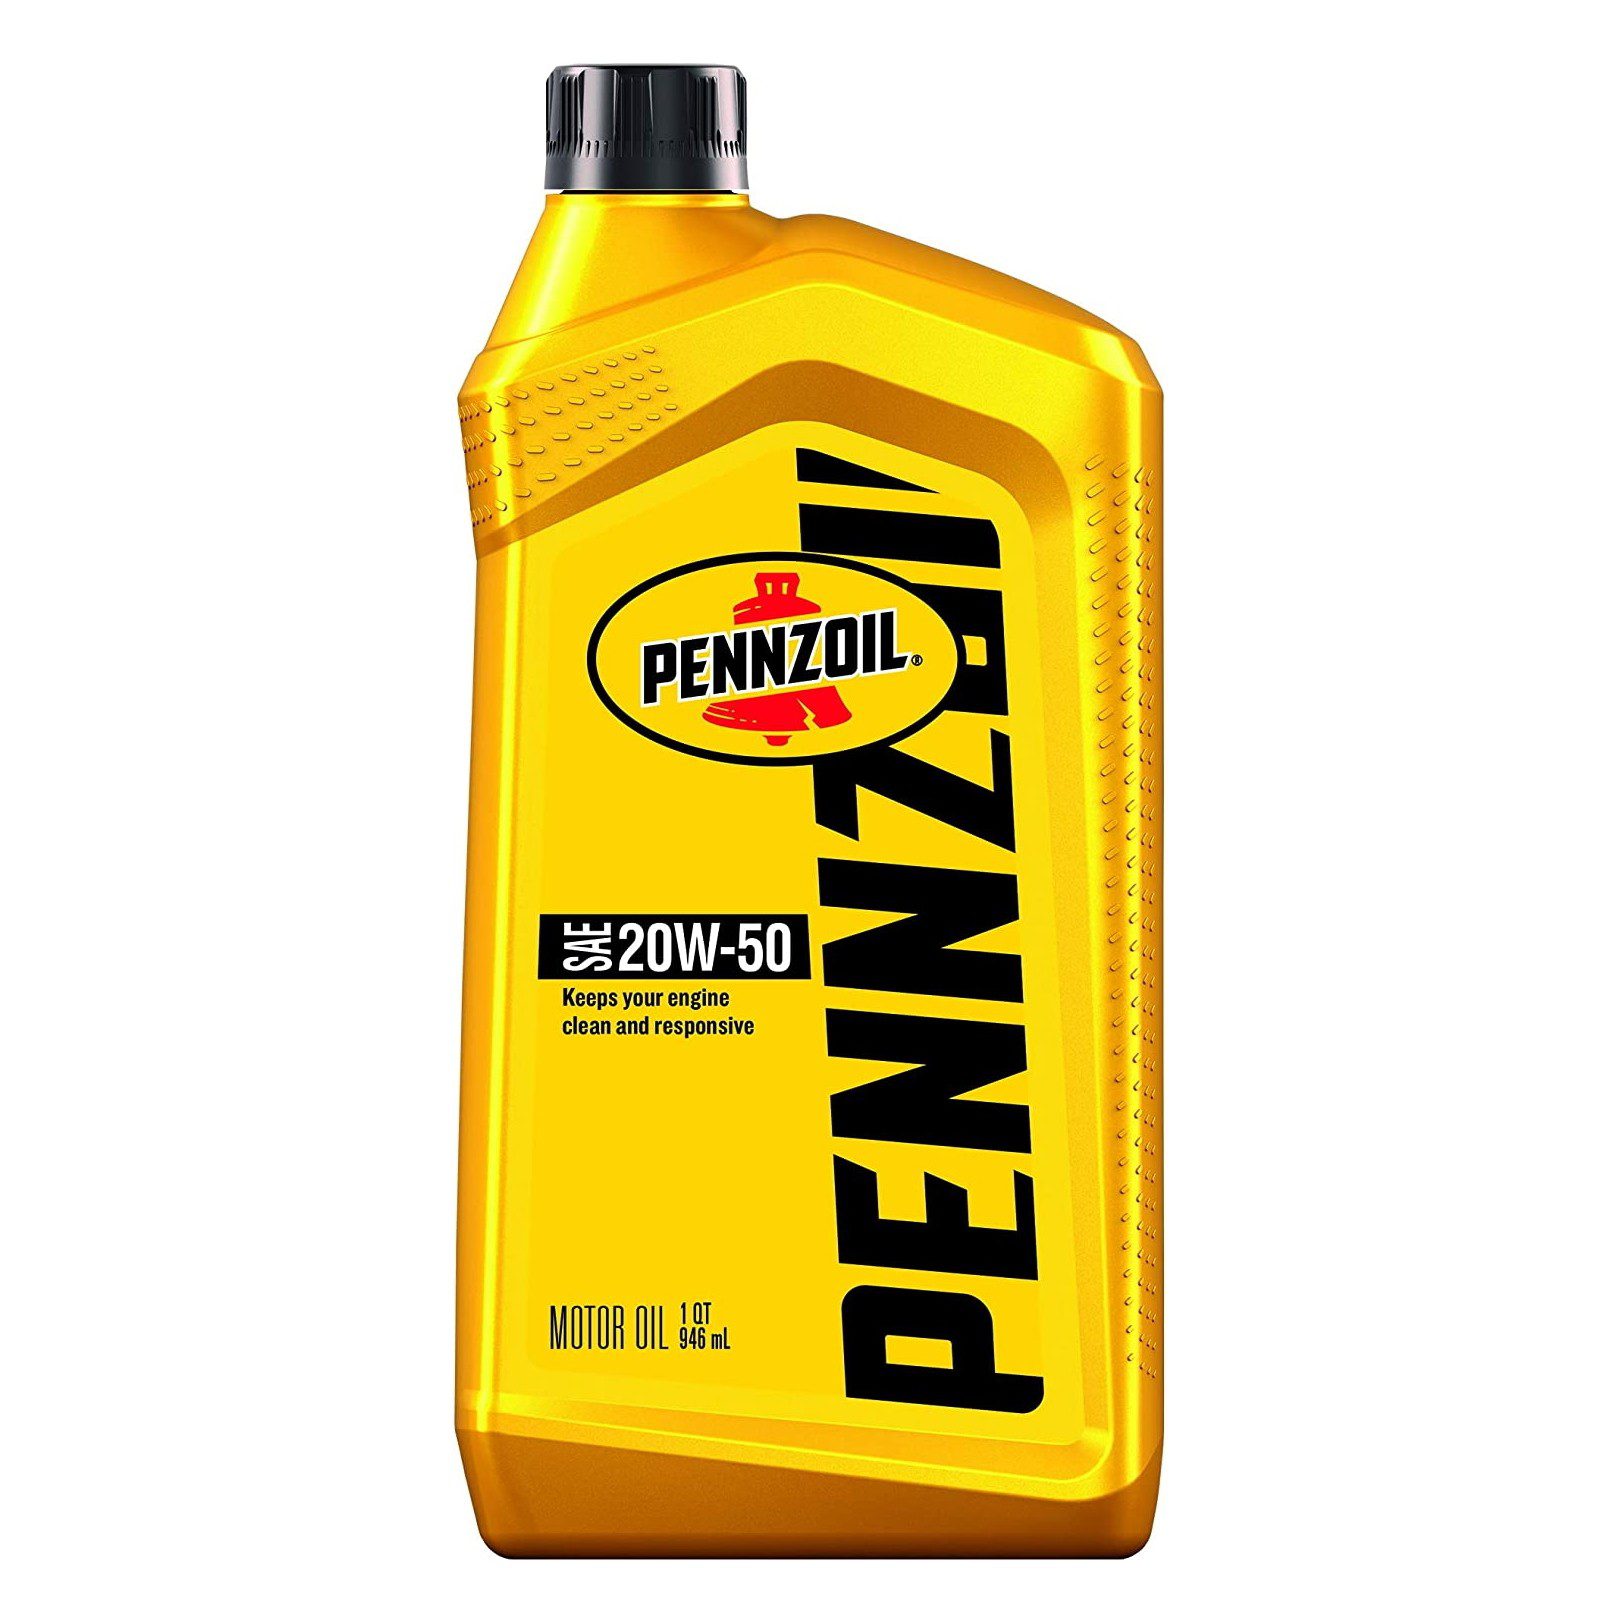 Is Pennzoil Full Synthetic Oil Good